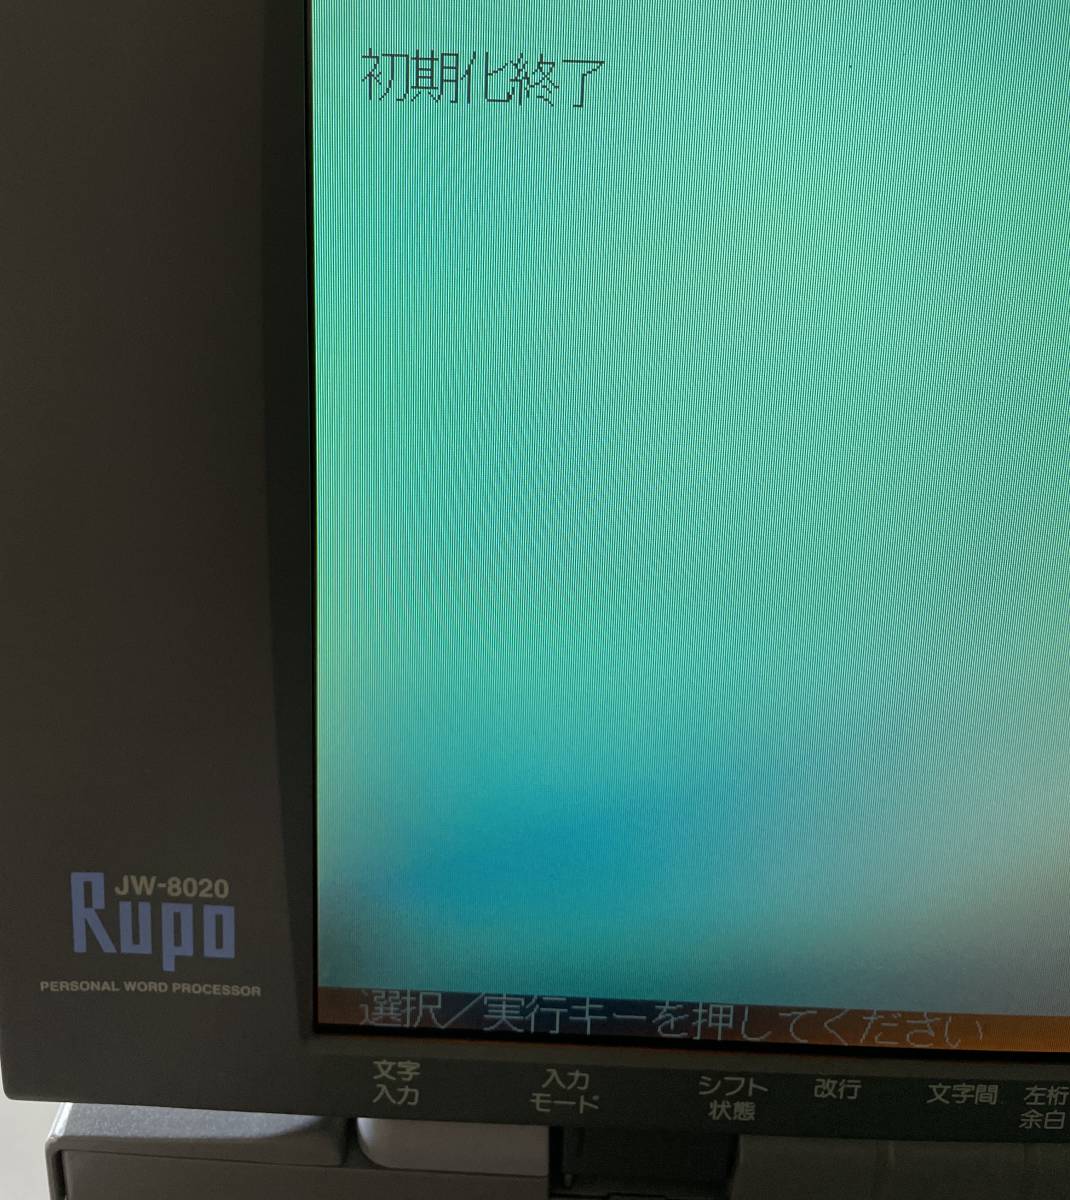 [ used ] Toshiba word-processor Lupo Rupo JW-8020 ink ribbon attaching basis operation verification settled 